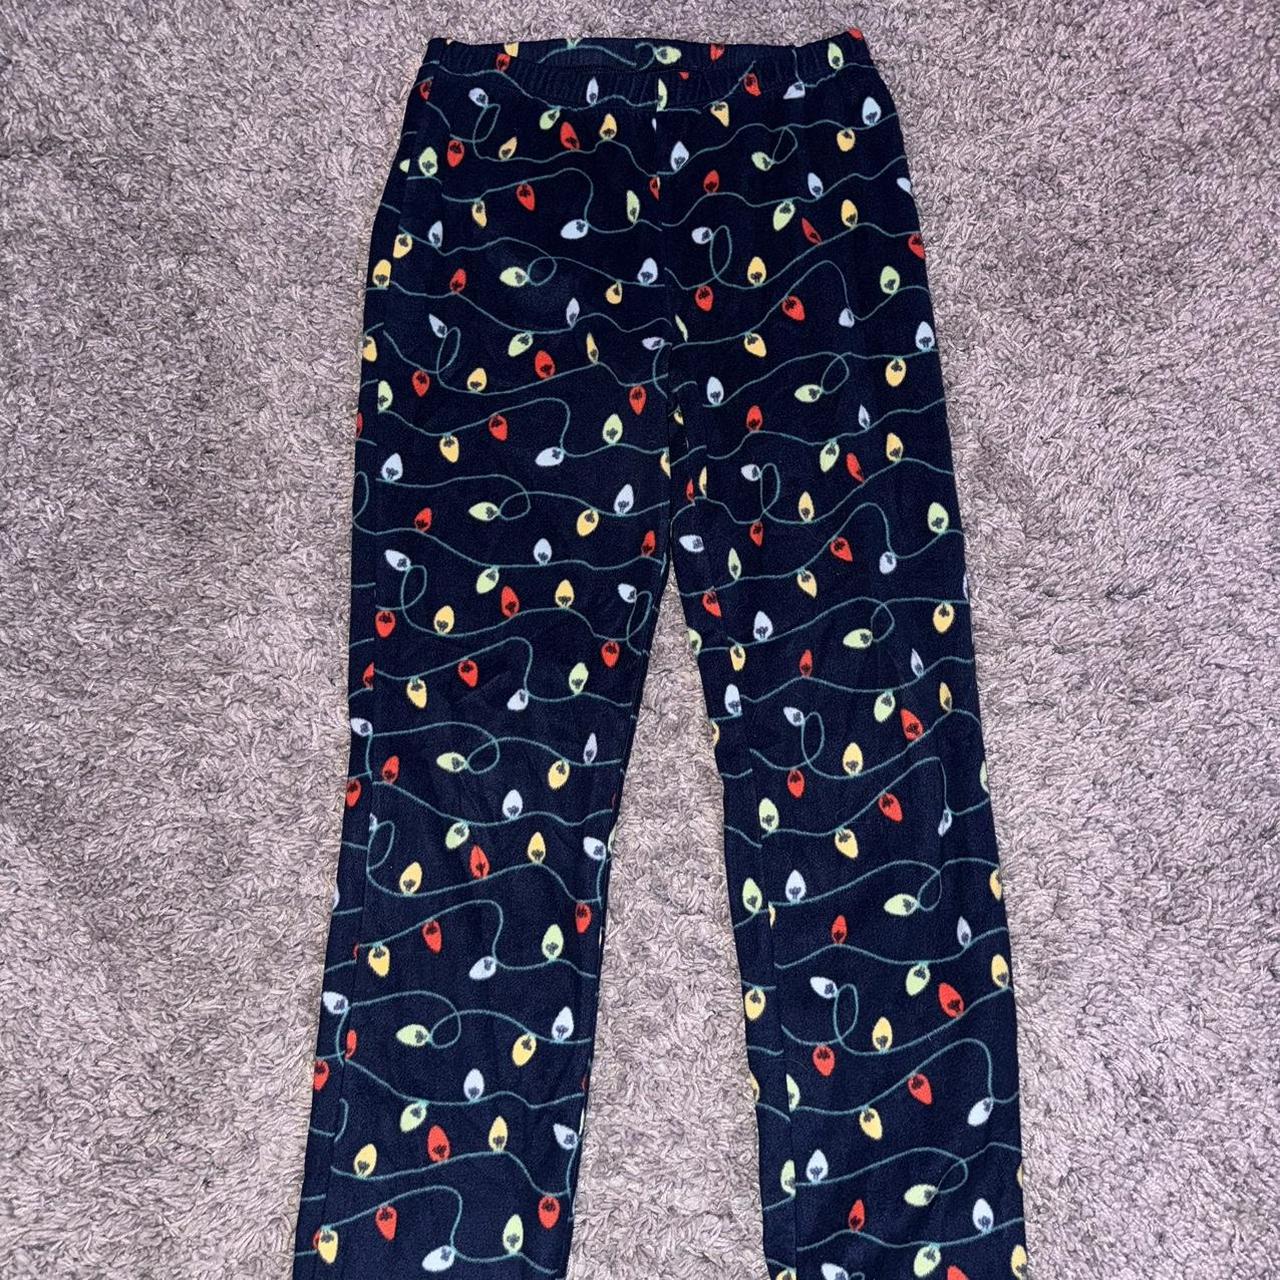 target wondershop pajama pants size xs - Depop